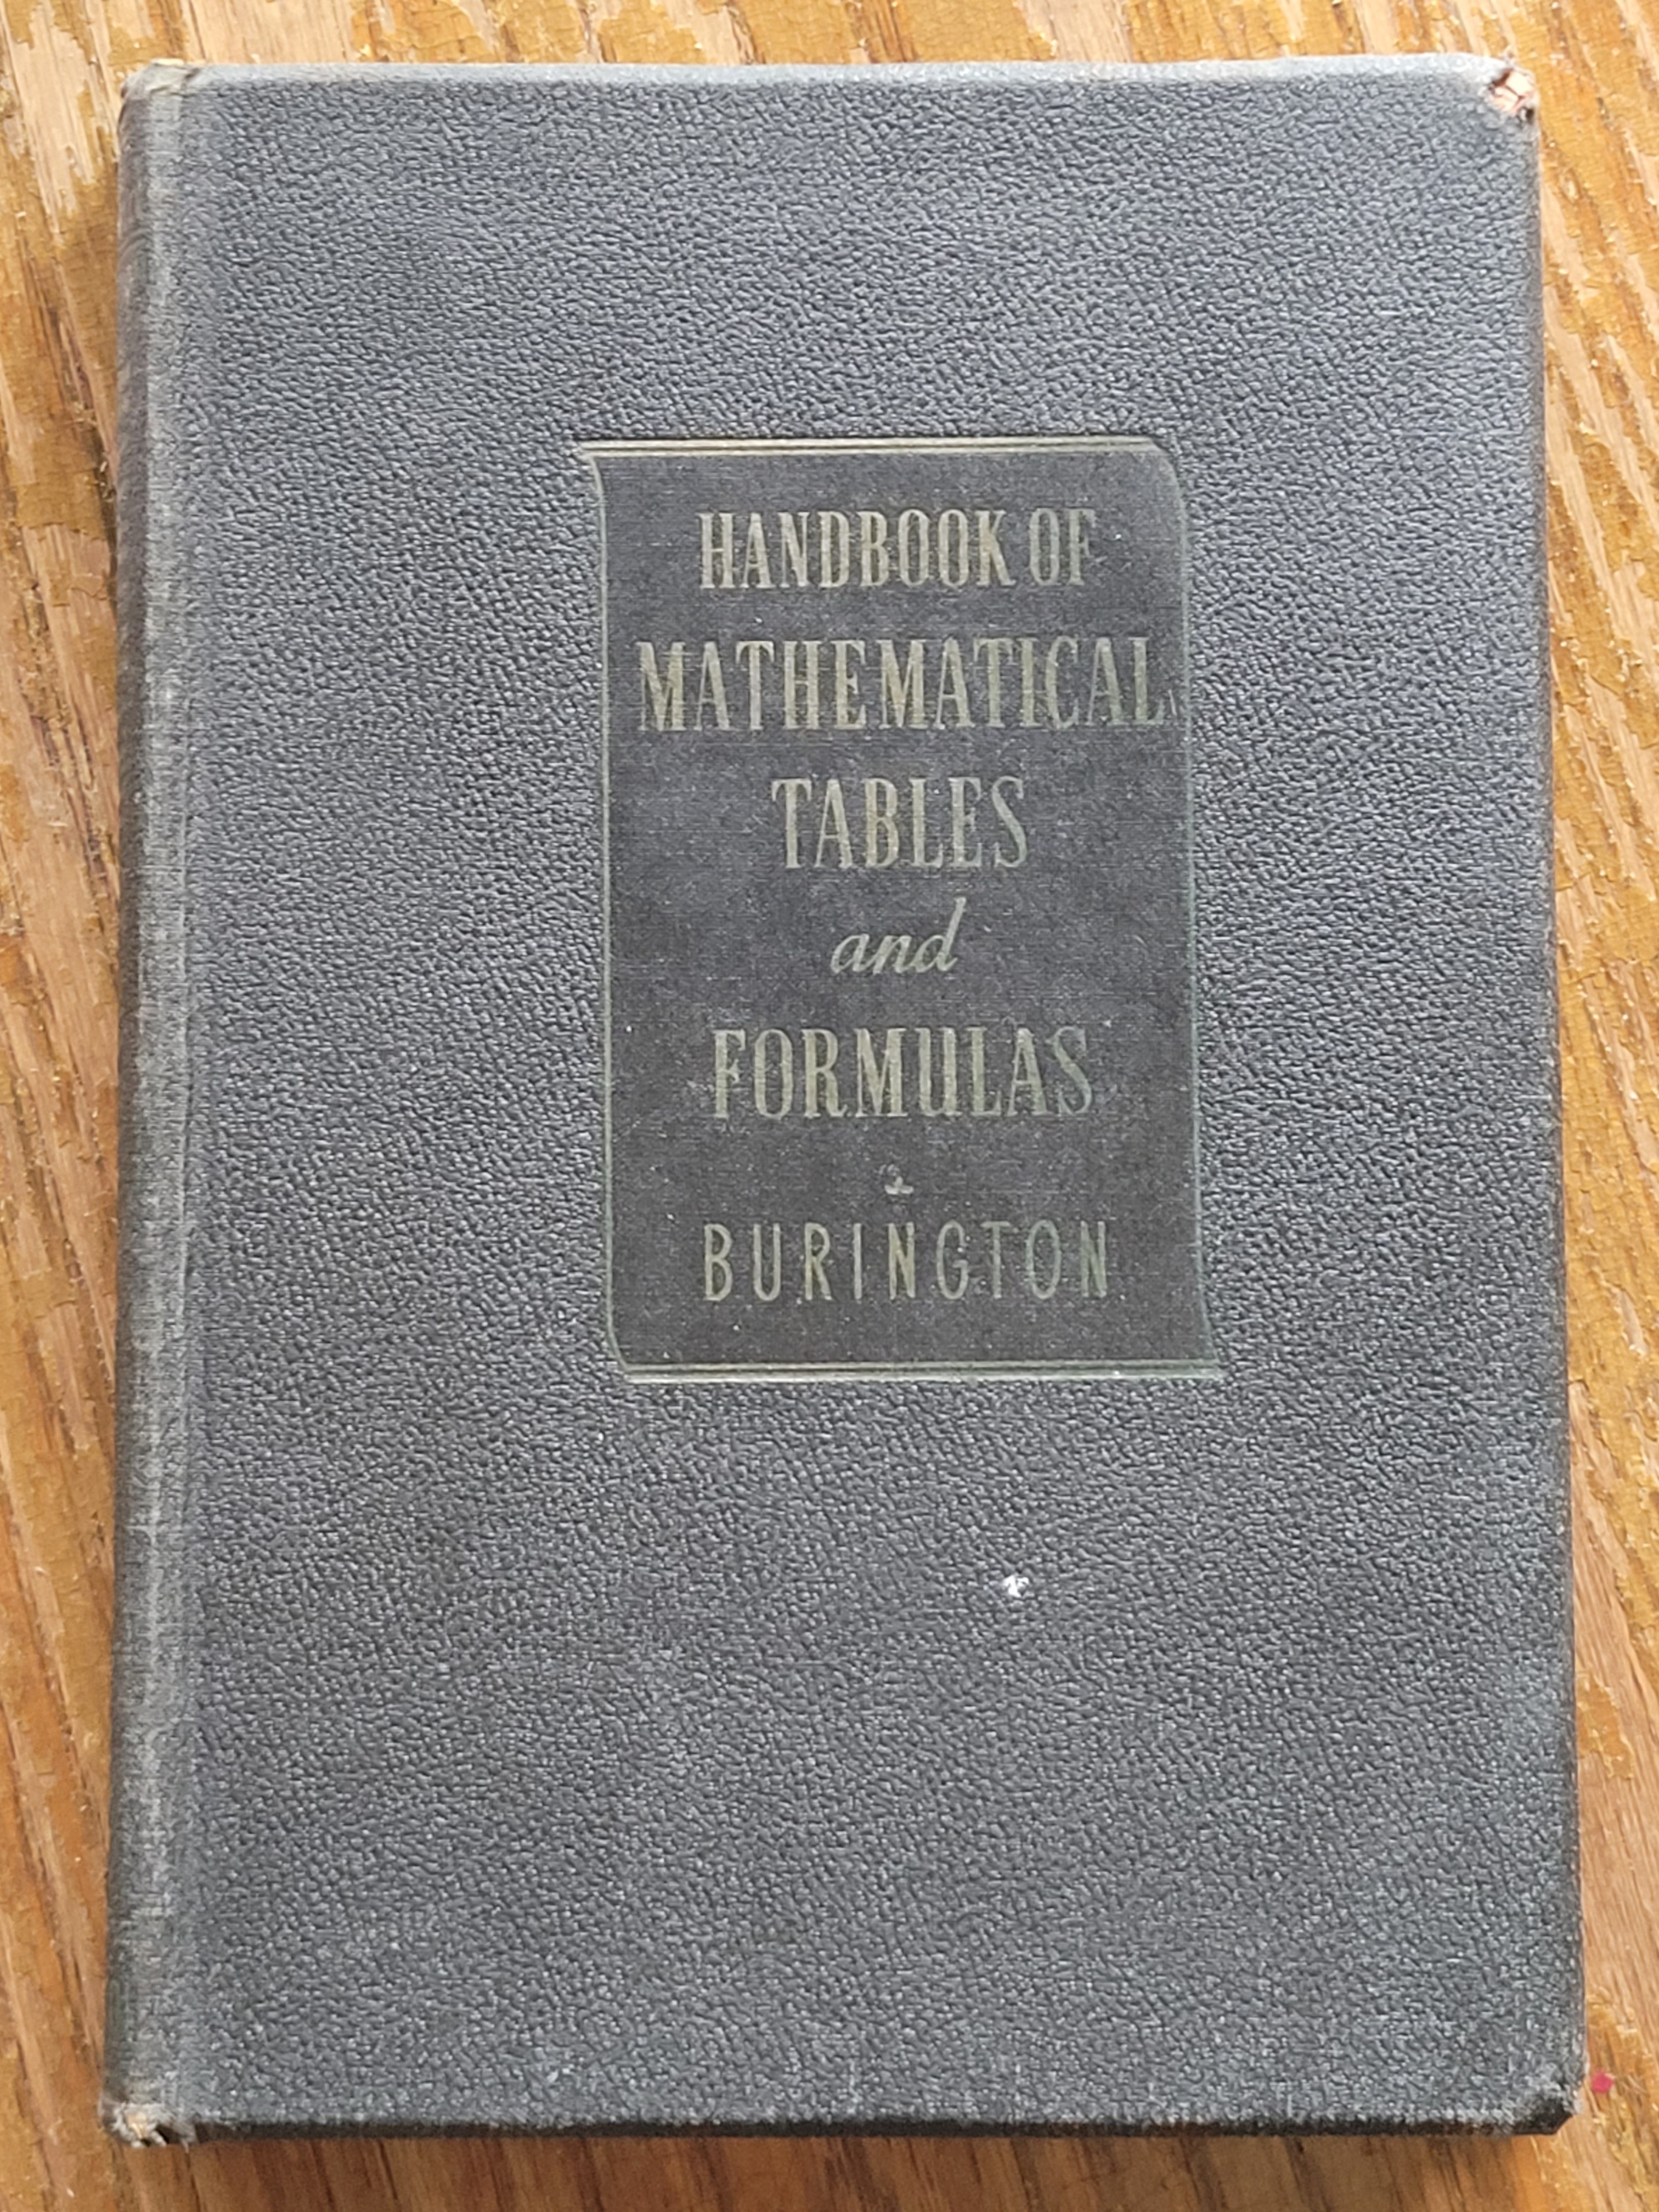 Handbook of Mathematical Tables and Formulas, Burington 1945